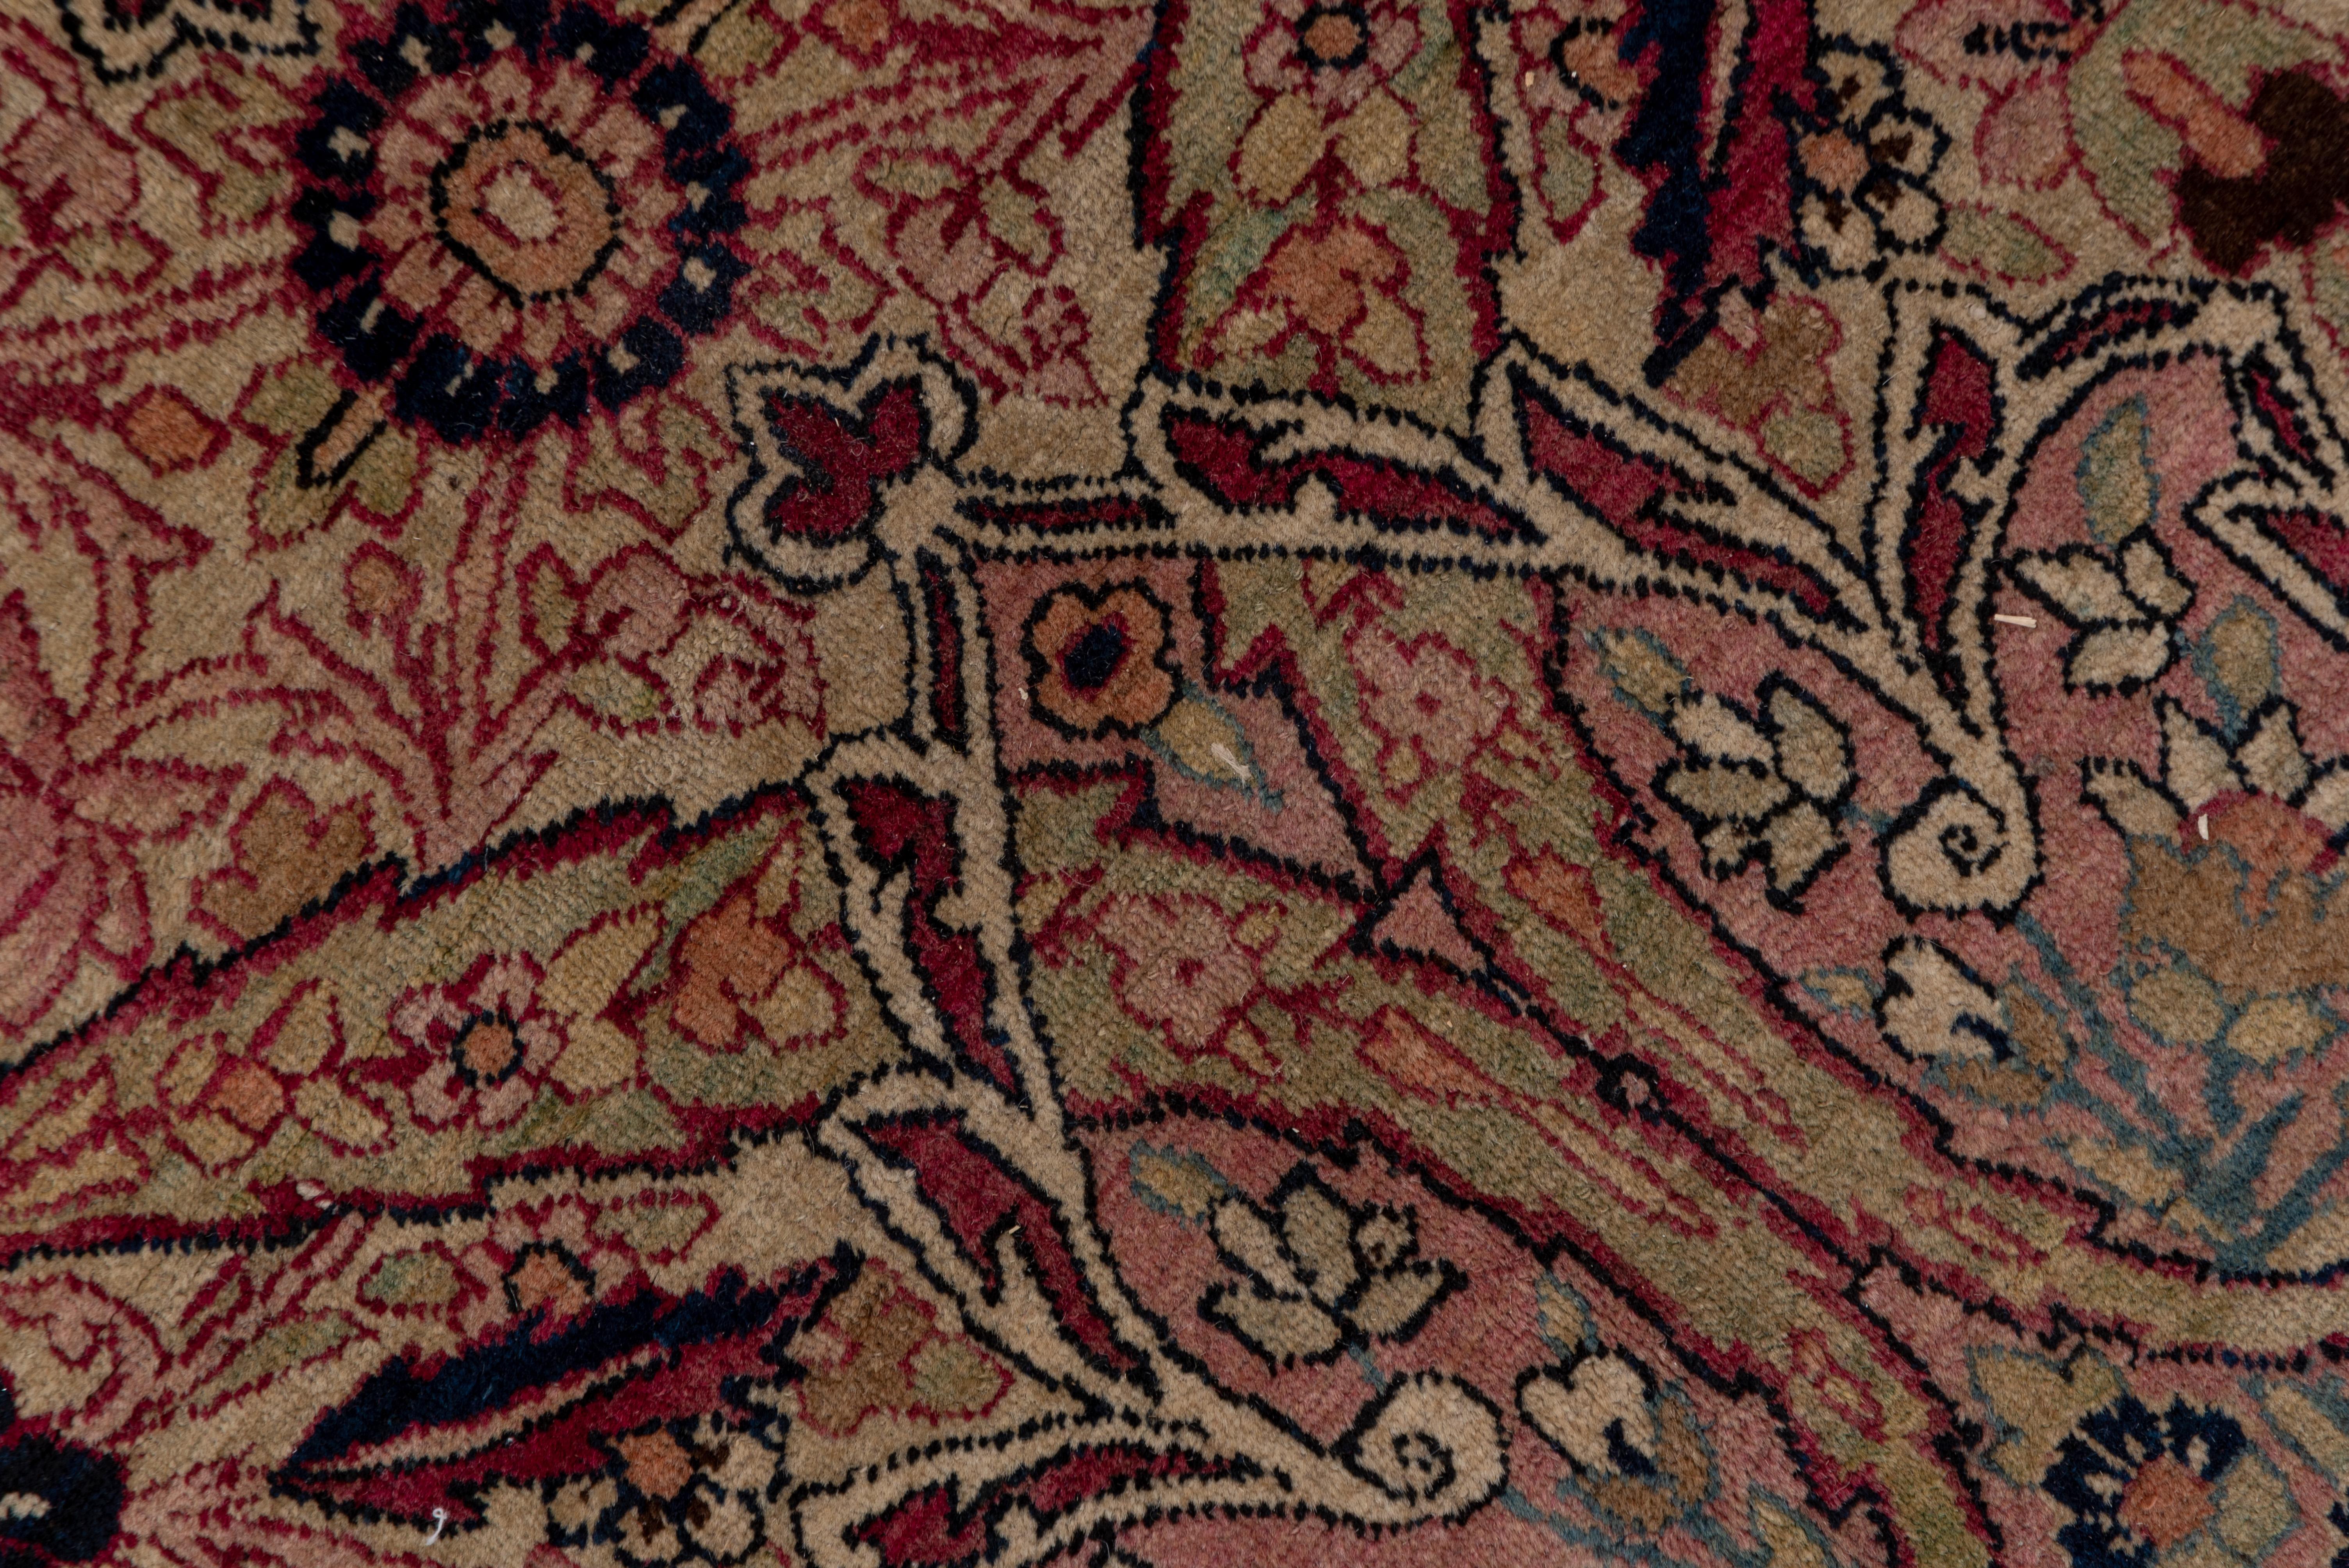 Early 20th Century Rare Antique Persian Lavar Kerman Workshop Carpet, Allover Field, Colorful